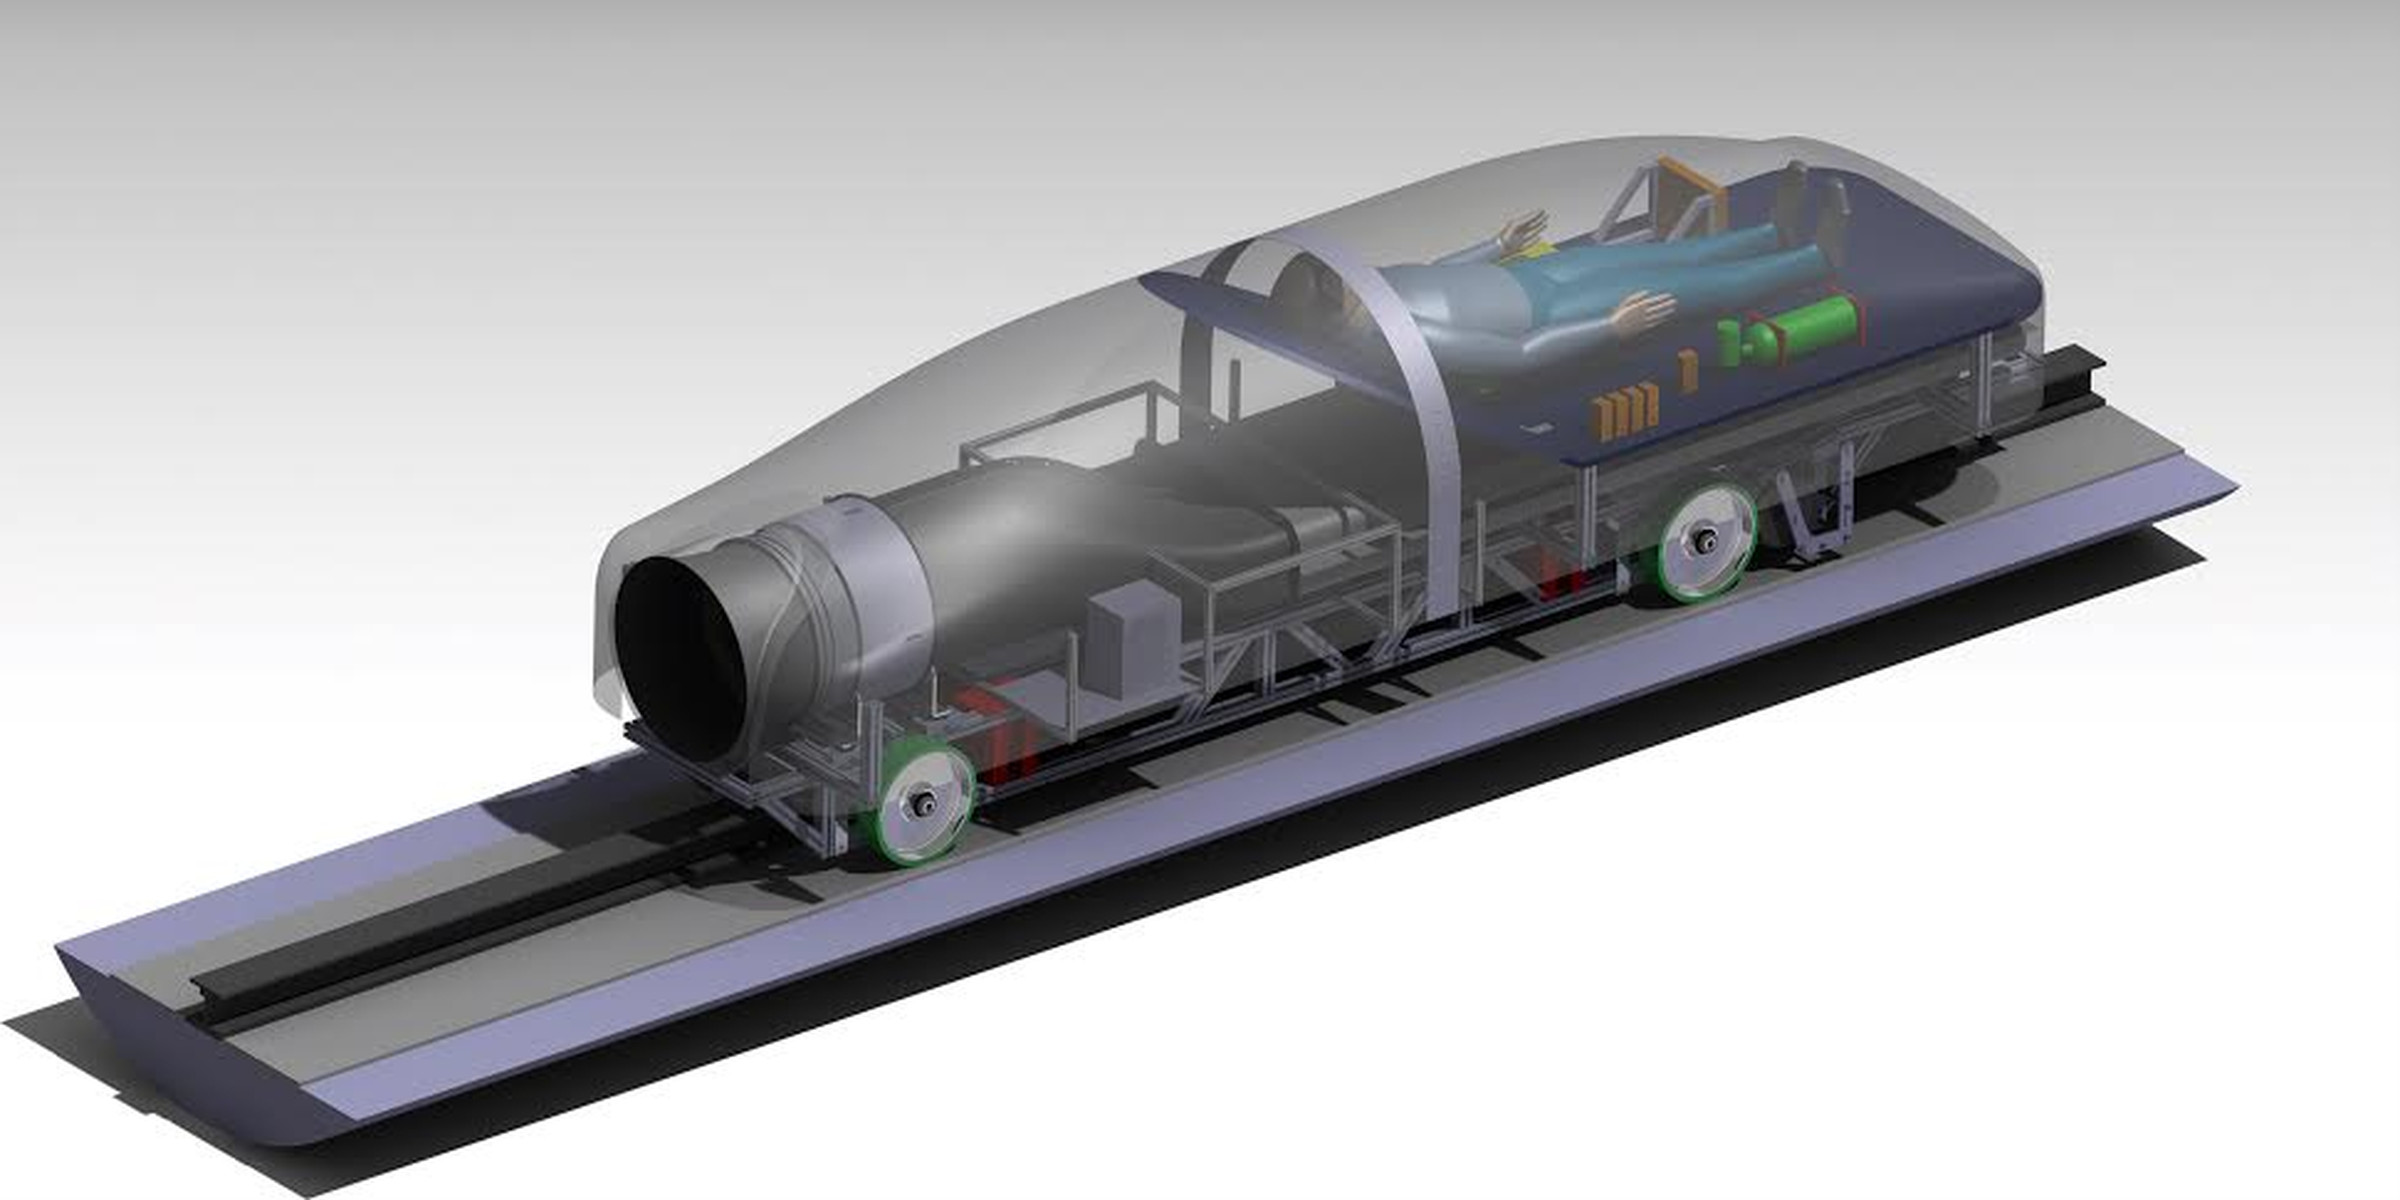 Hyperloop pod gallery